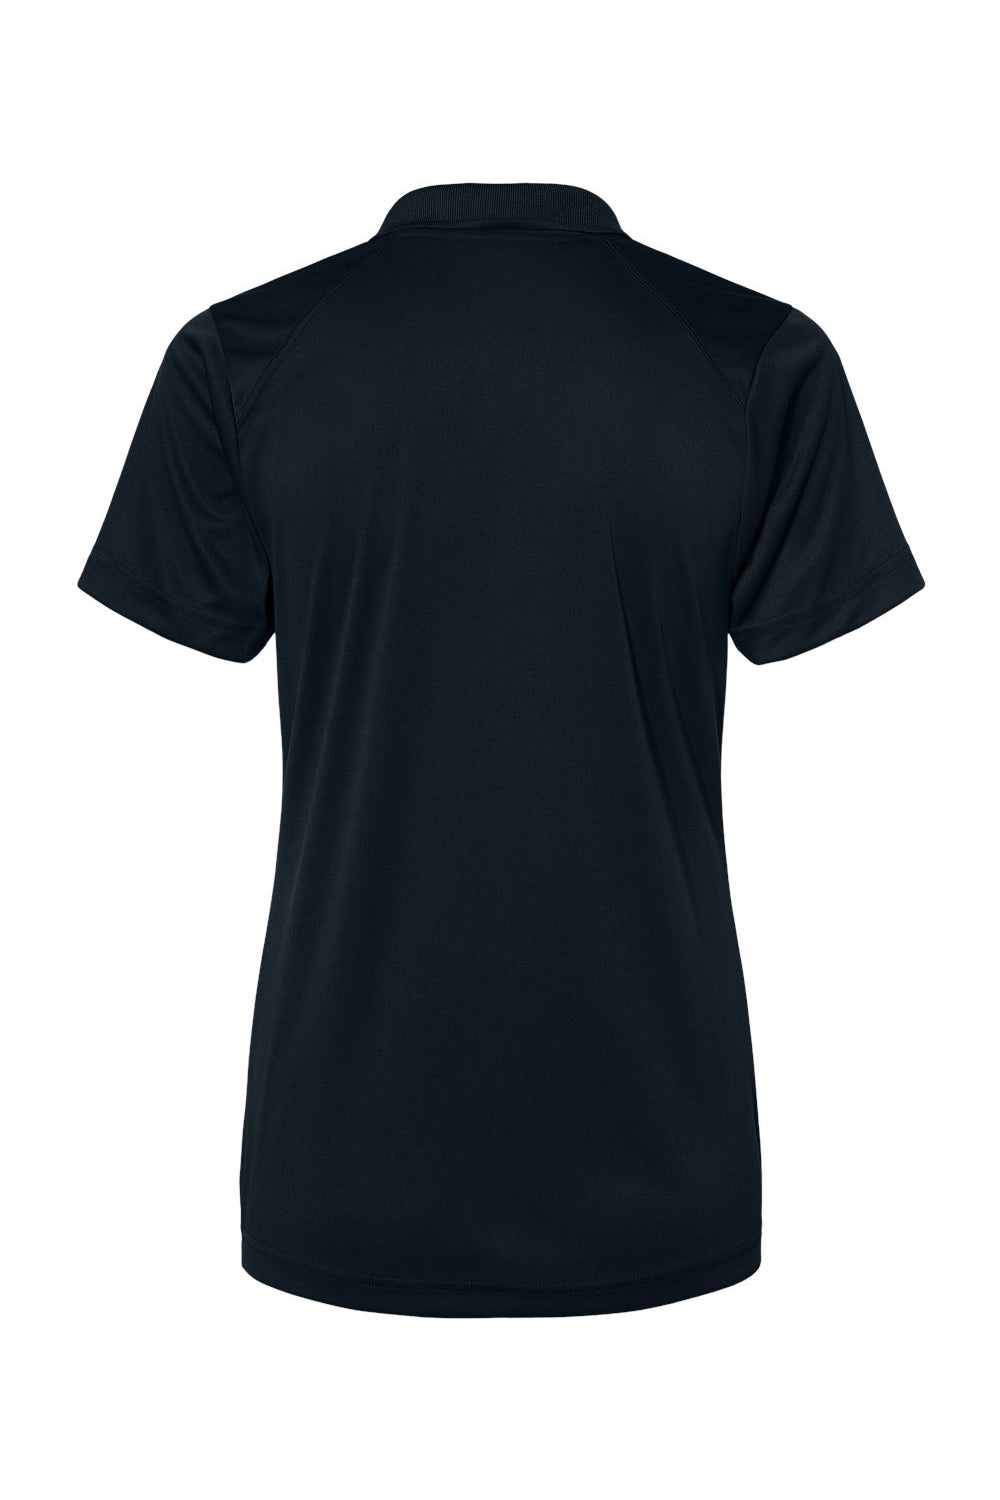 C2 Sport 5902 Womens Moisture Wicking Short Sleeve Polo Shirt Black Flat Back